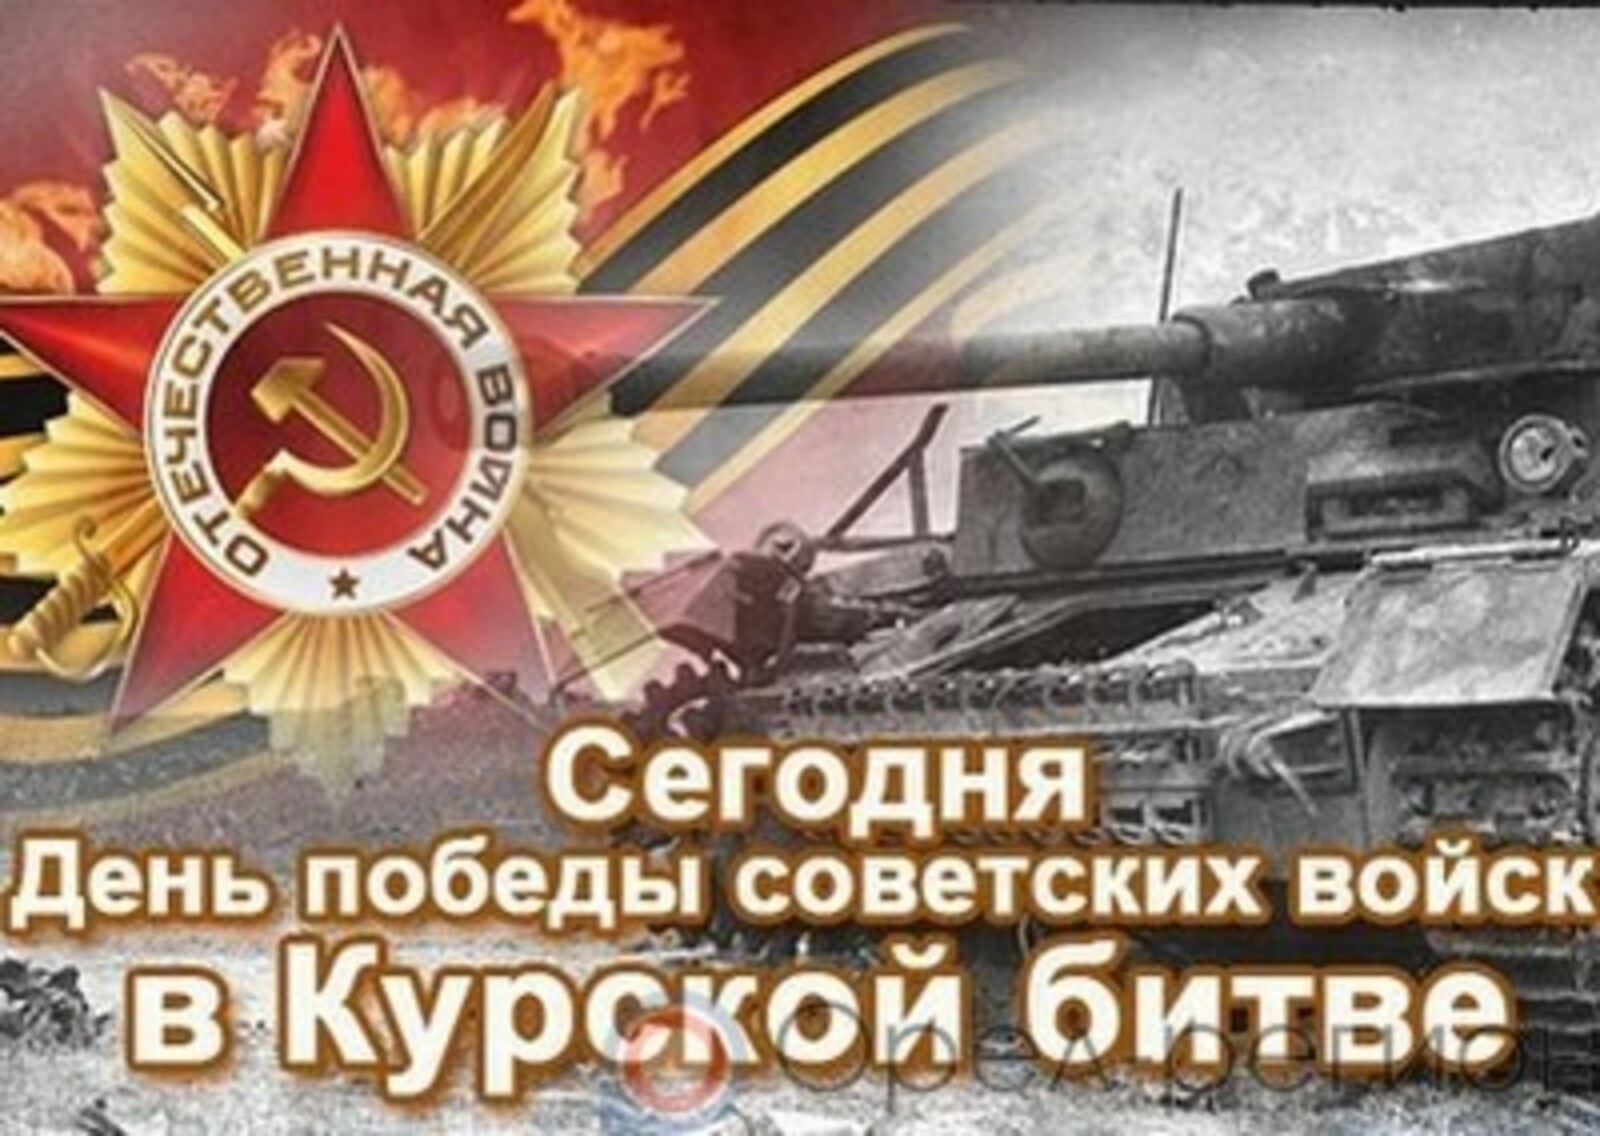 Успех в Курской битве - перелом к победе